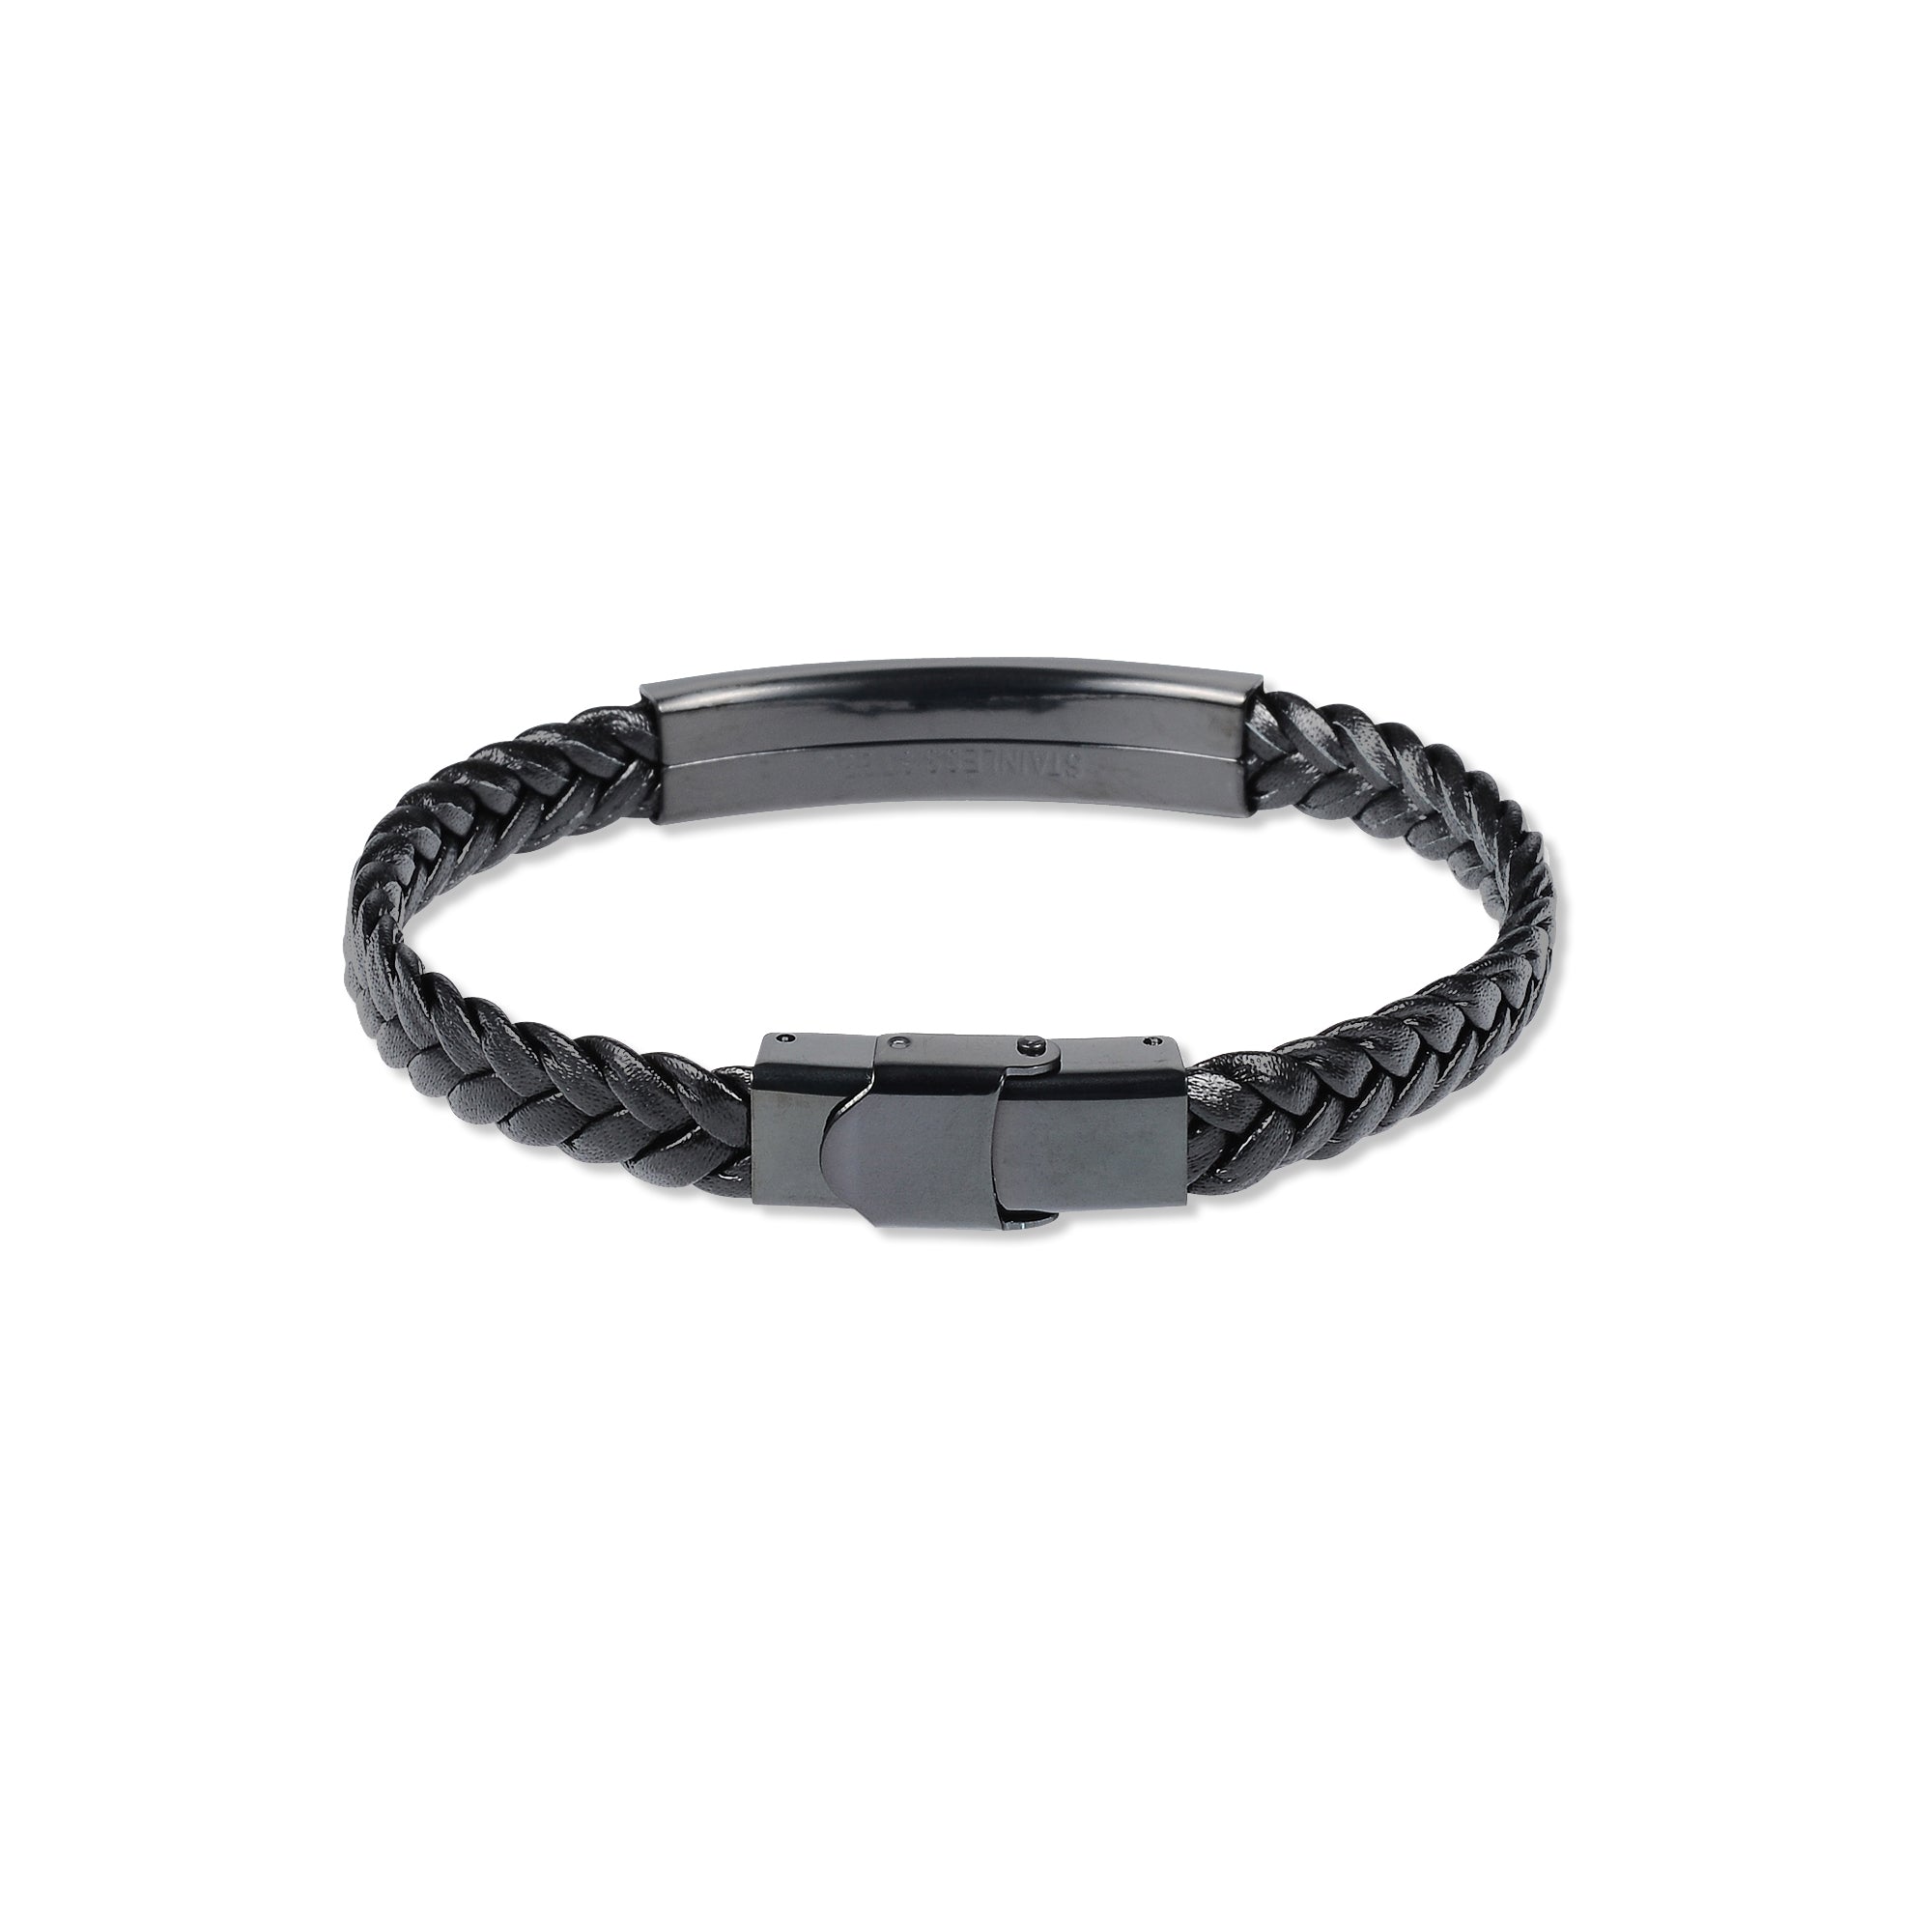 Black Leather Braided Stainless Steel Bracelet